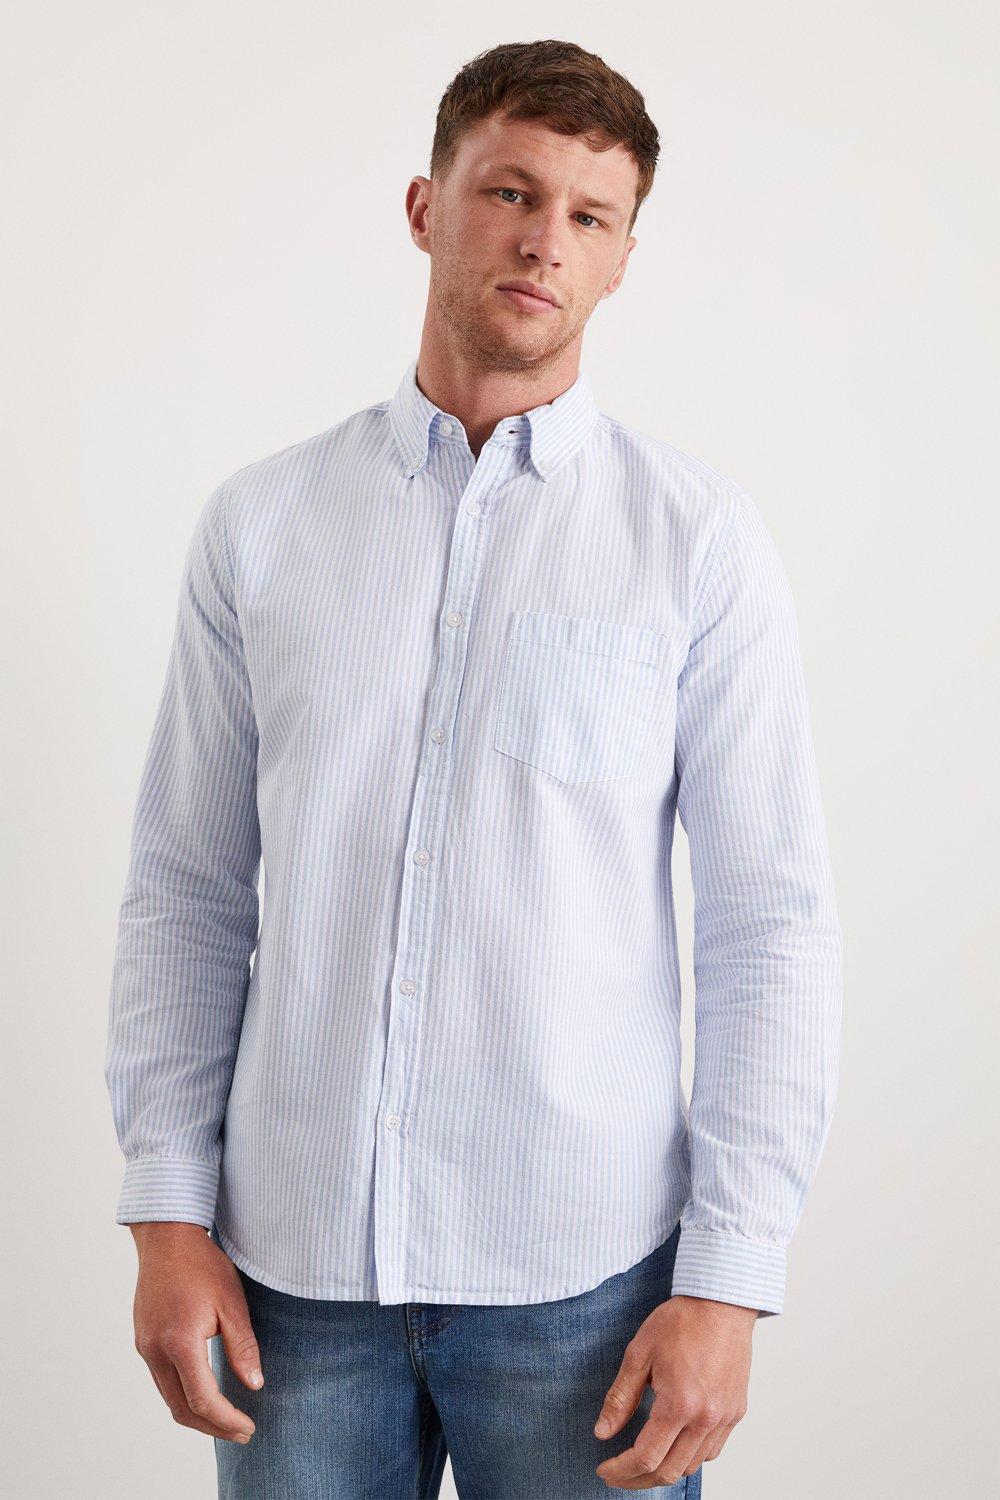 Mens White And Blue Long Sleeve Pocket Oxford Shirt